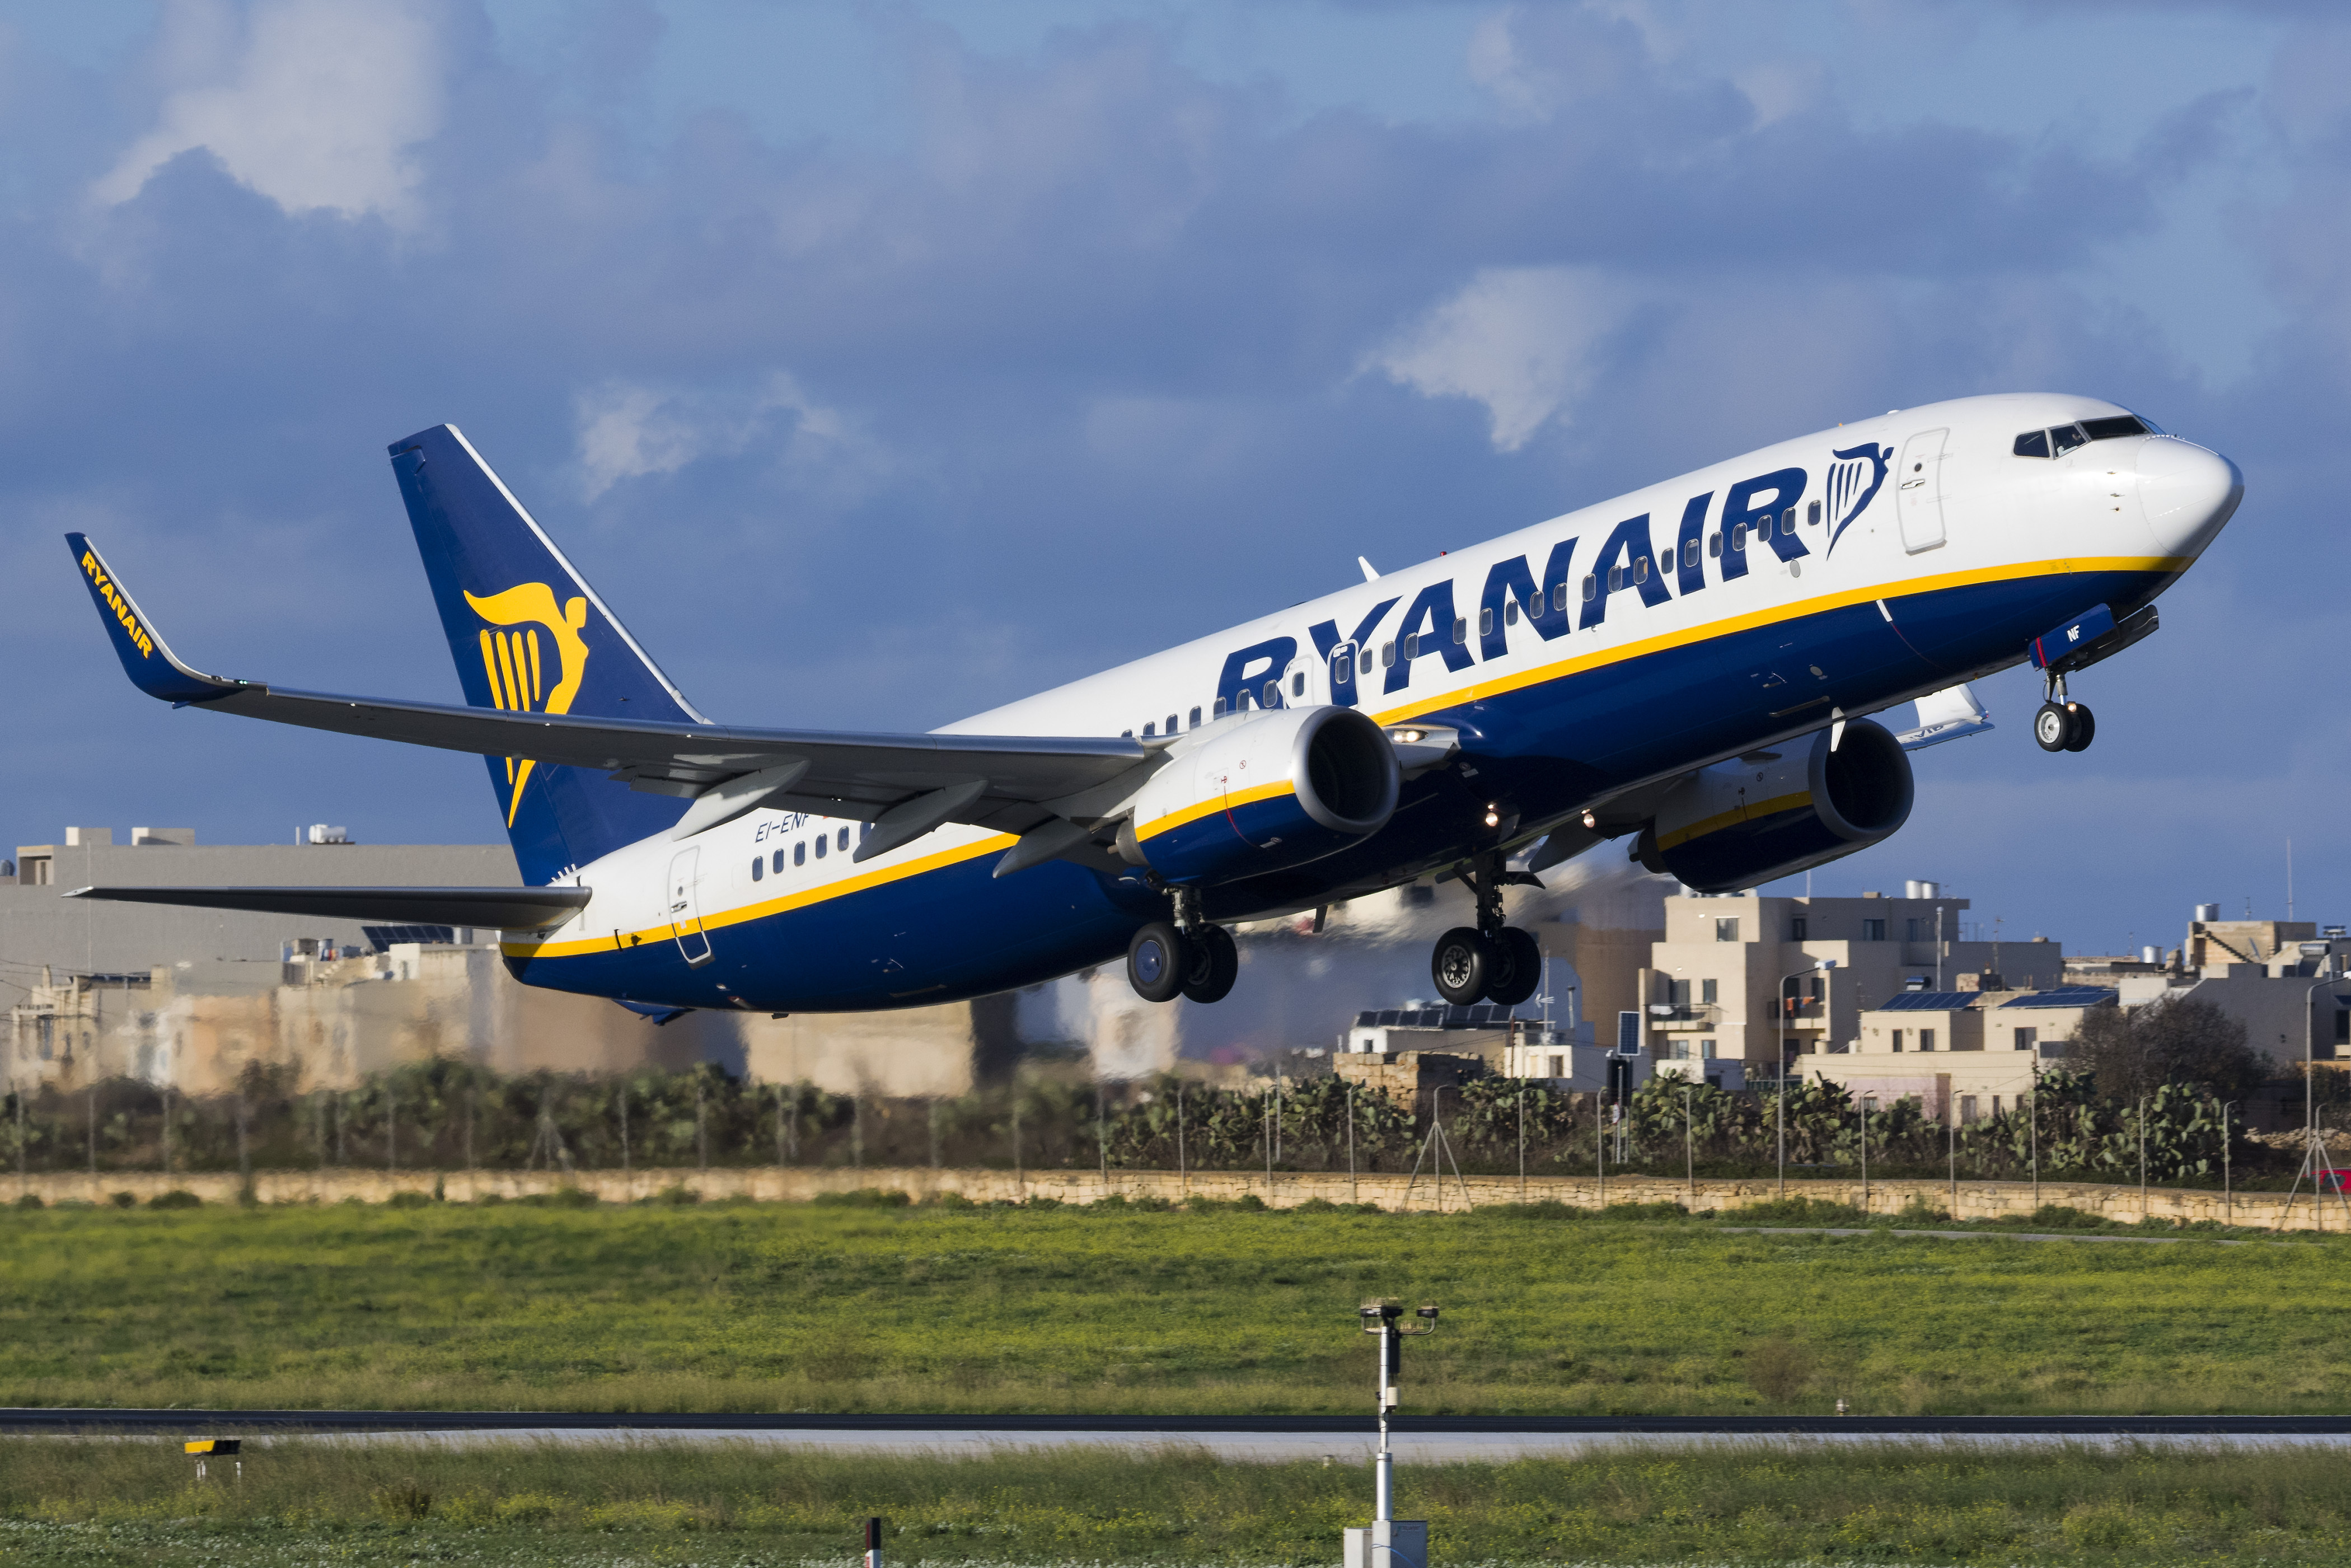 Ryanair random seat allocation is not so random, says Oxford University expert